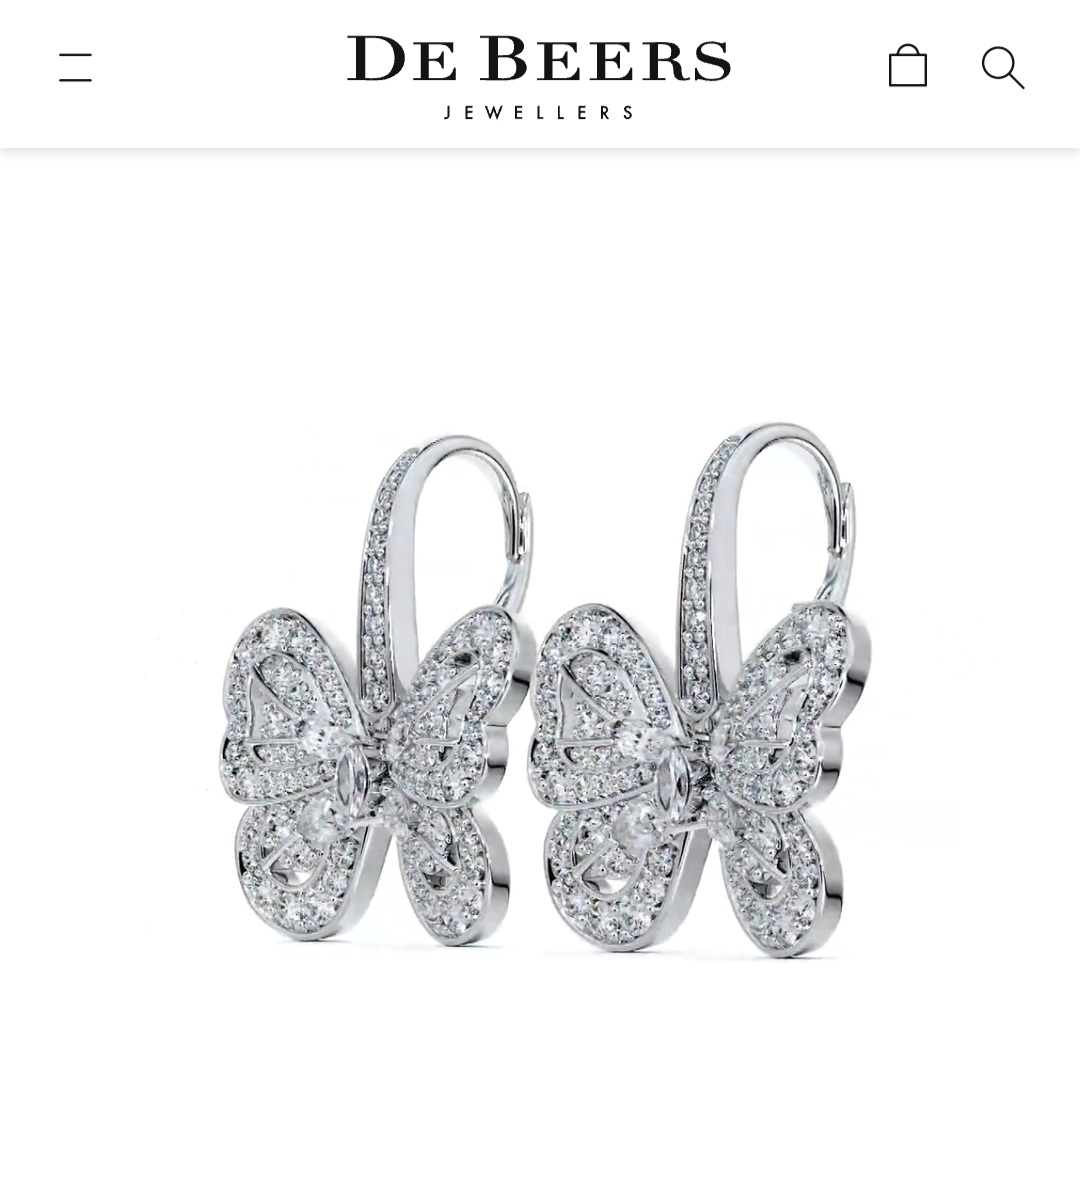 De Beers earrings